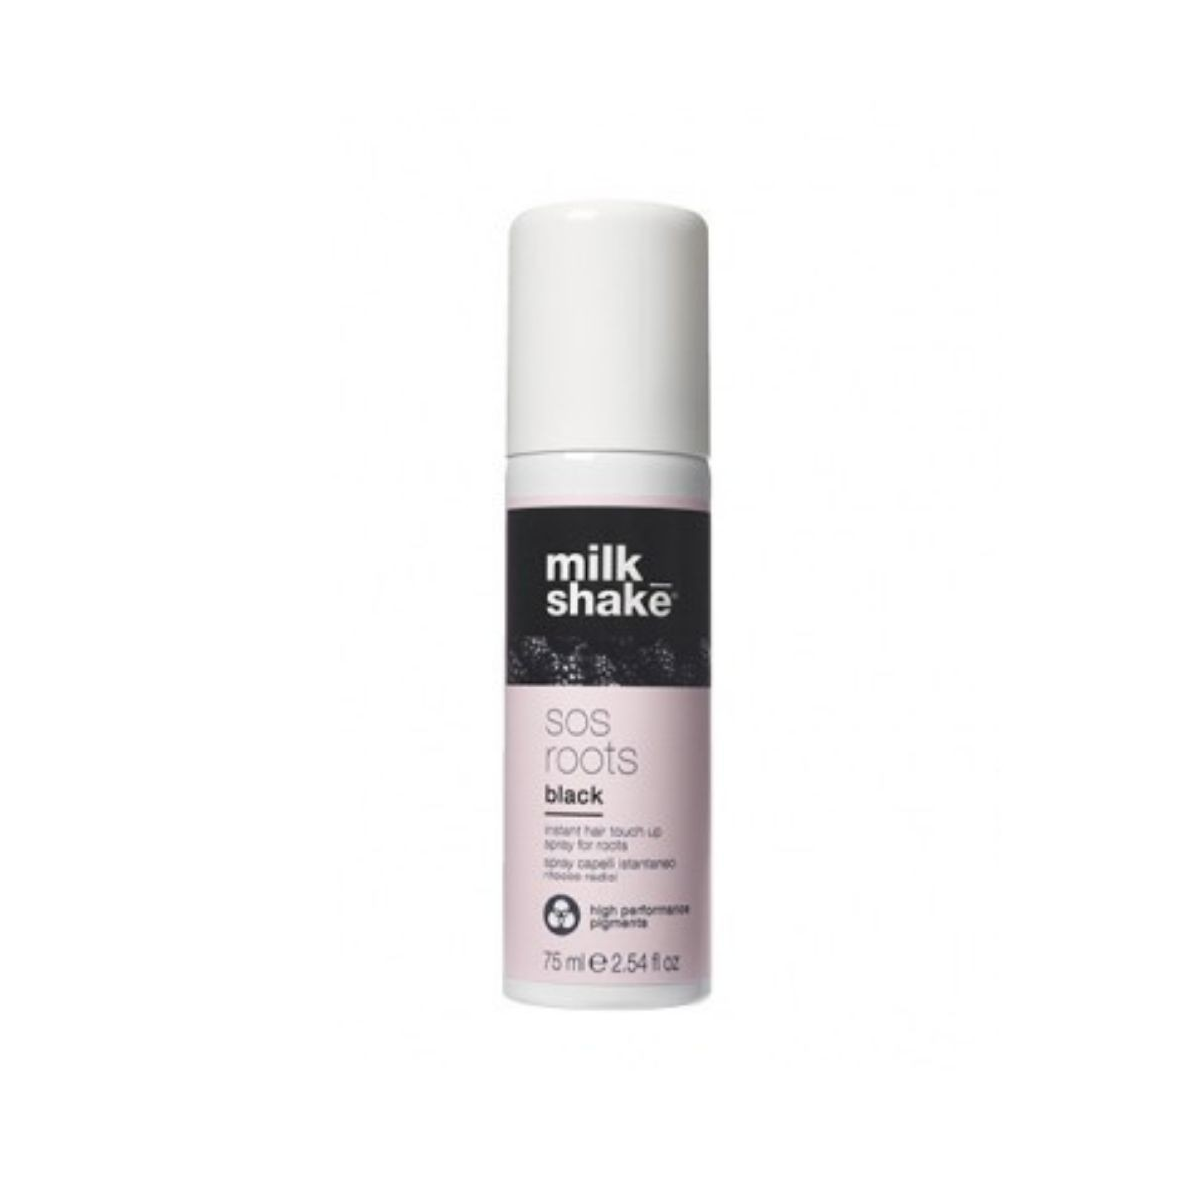 Z.ONE - MILK SHAKE - SOS ROOTS BLACK (75ml) Spray capelli istantaneo ritocco radici